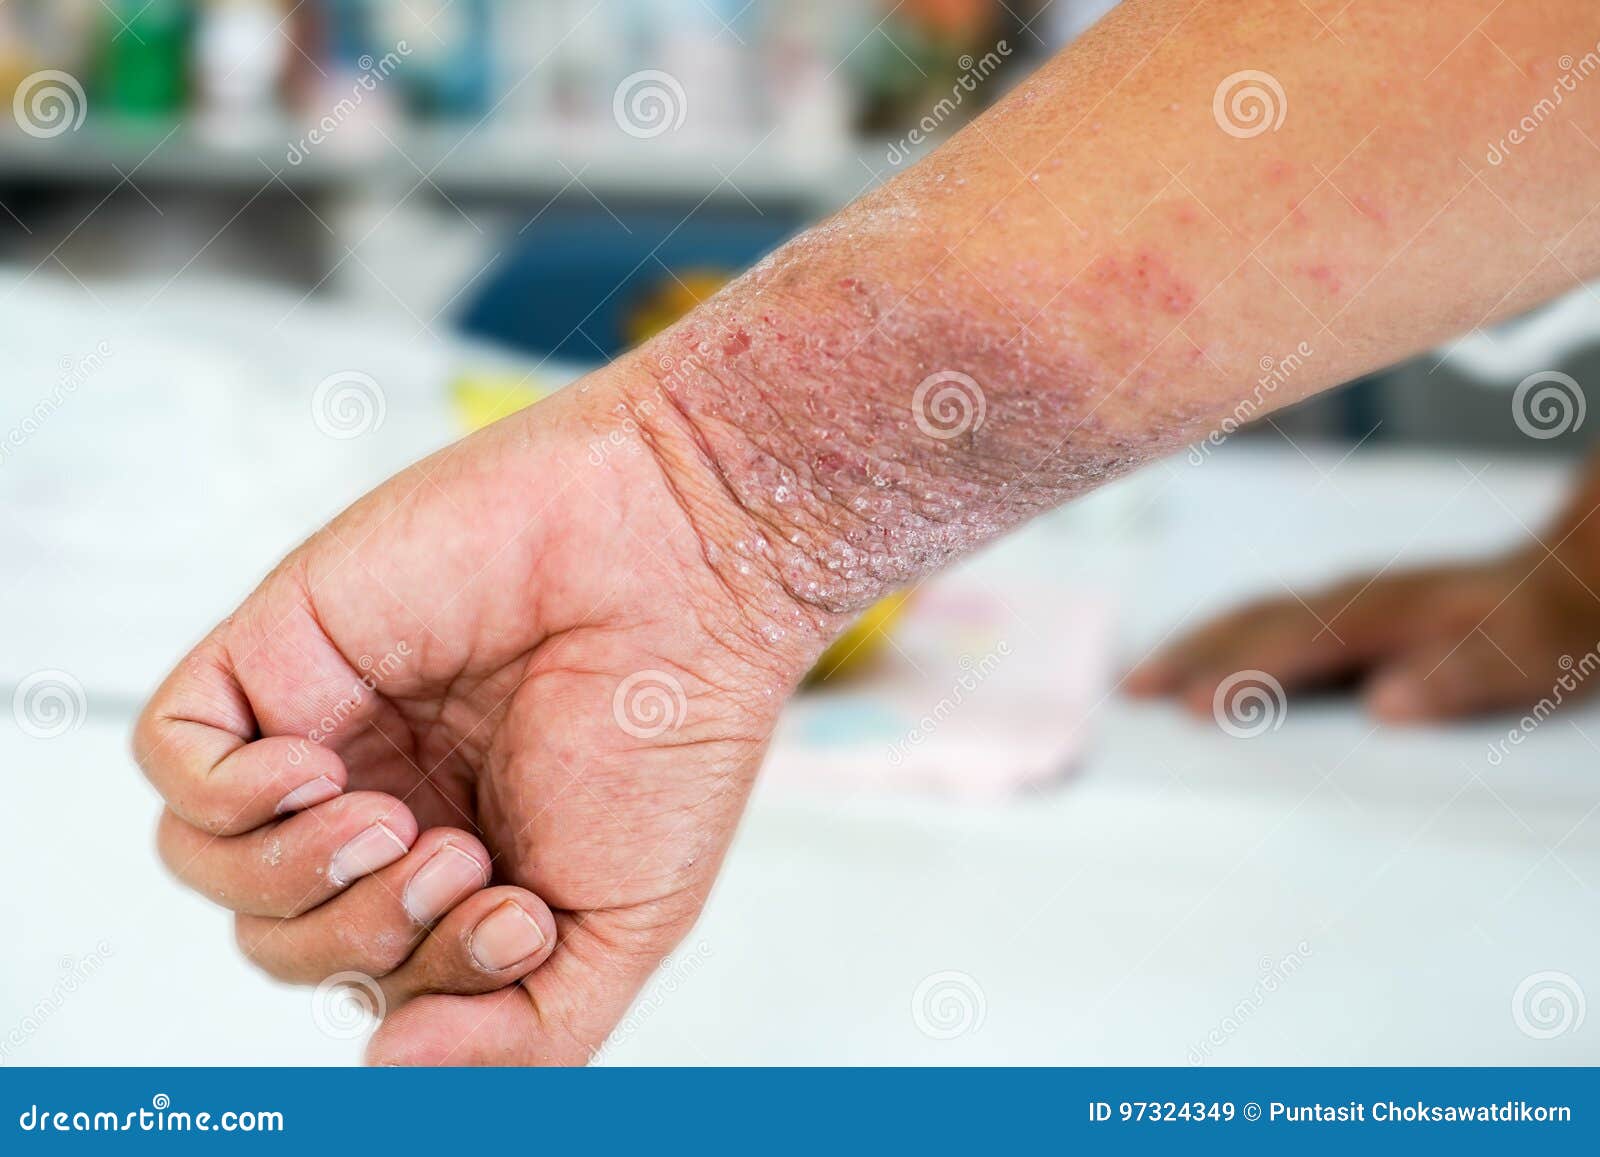 eczema presents on the hand